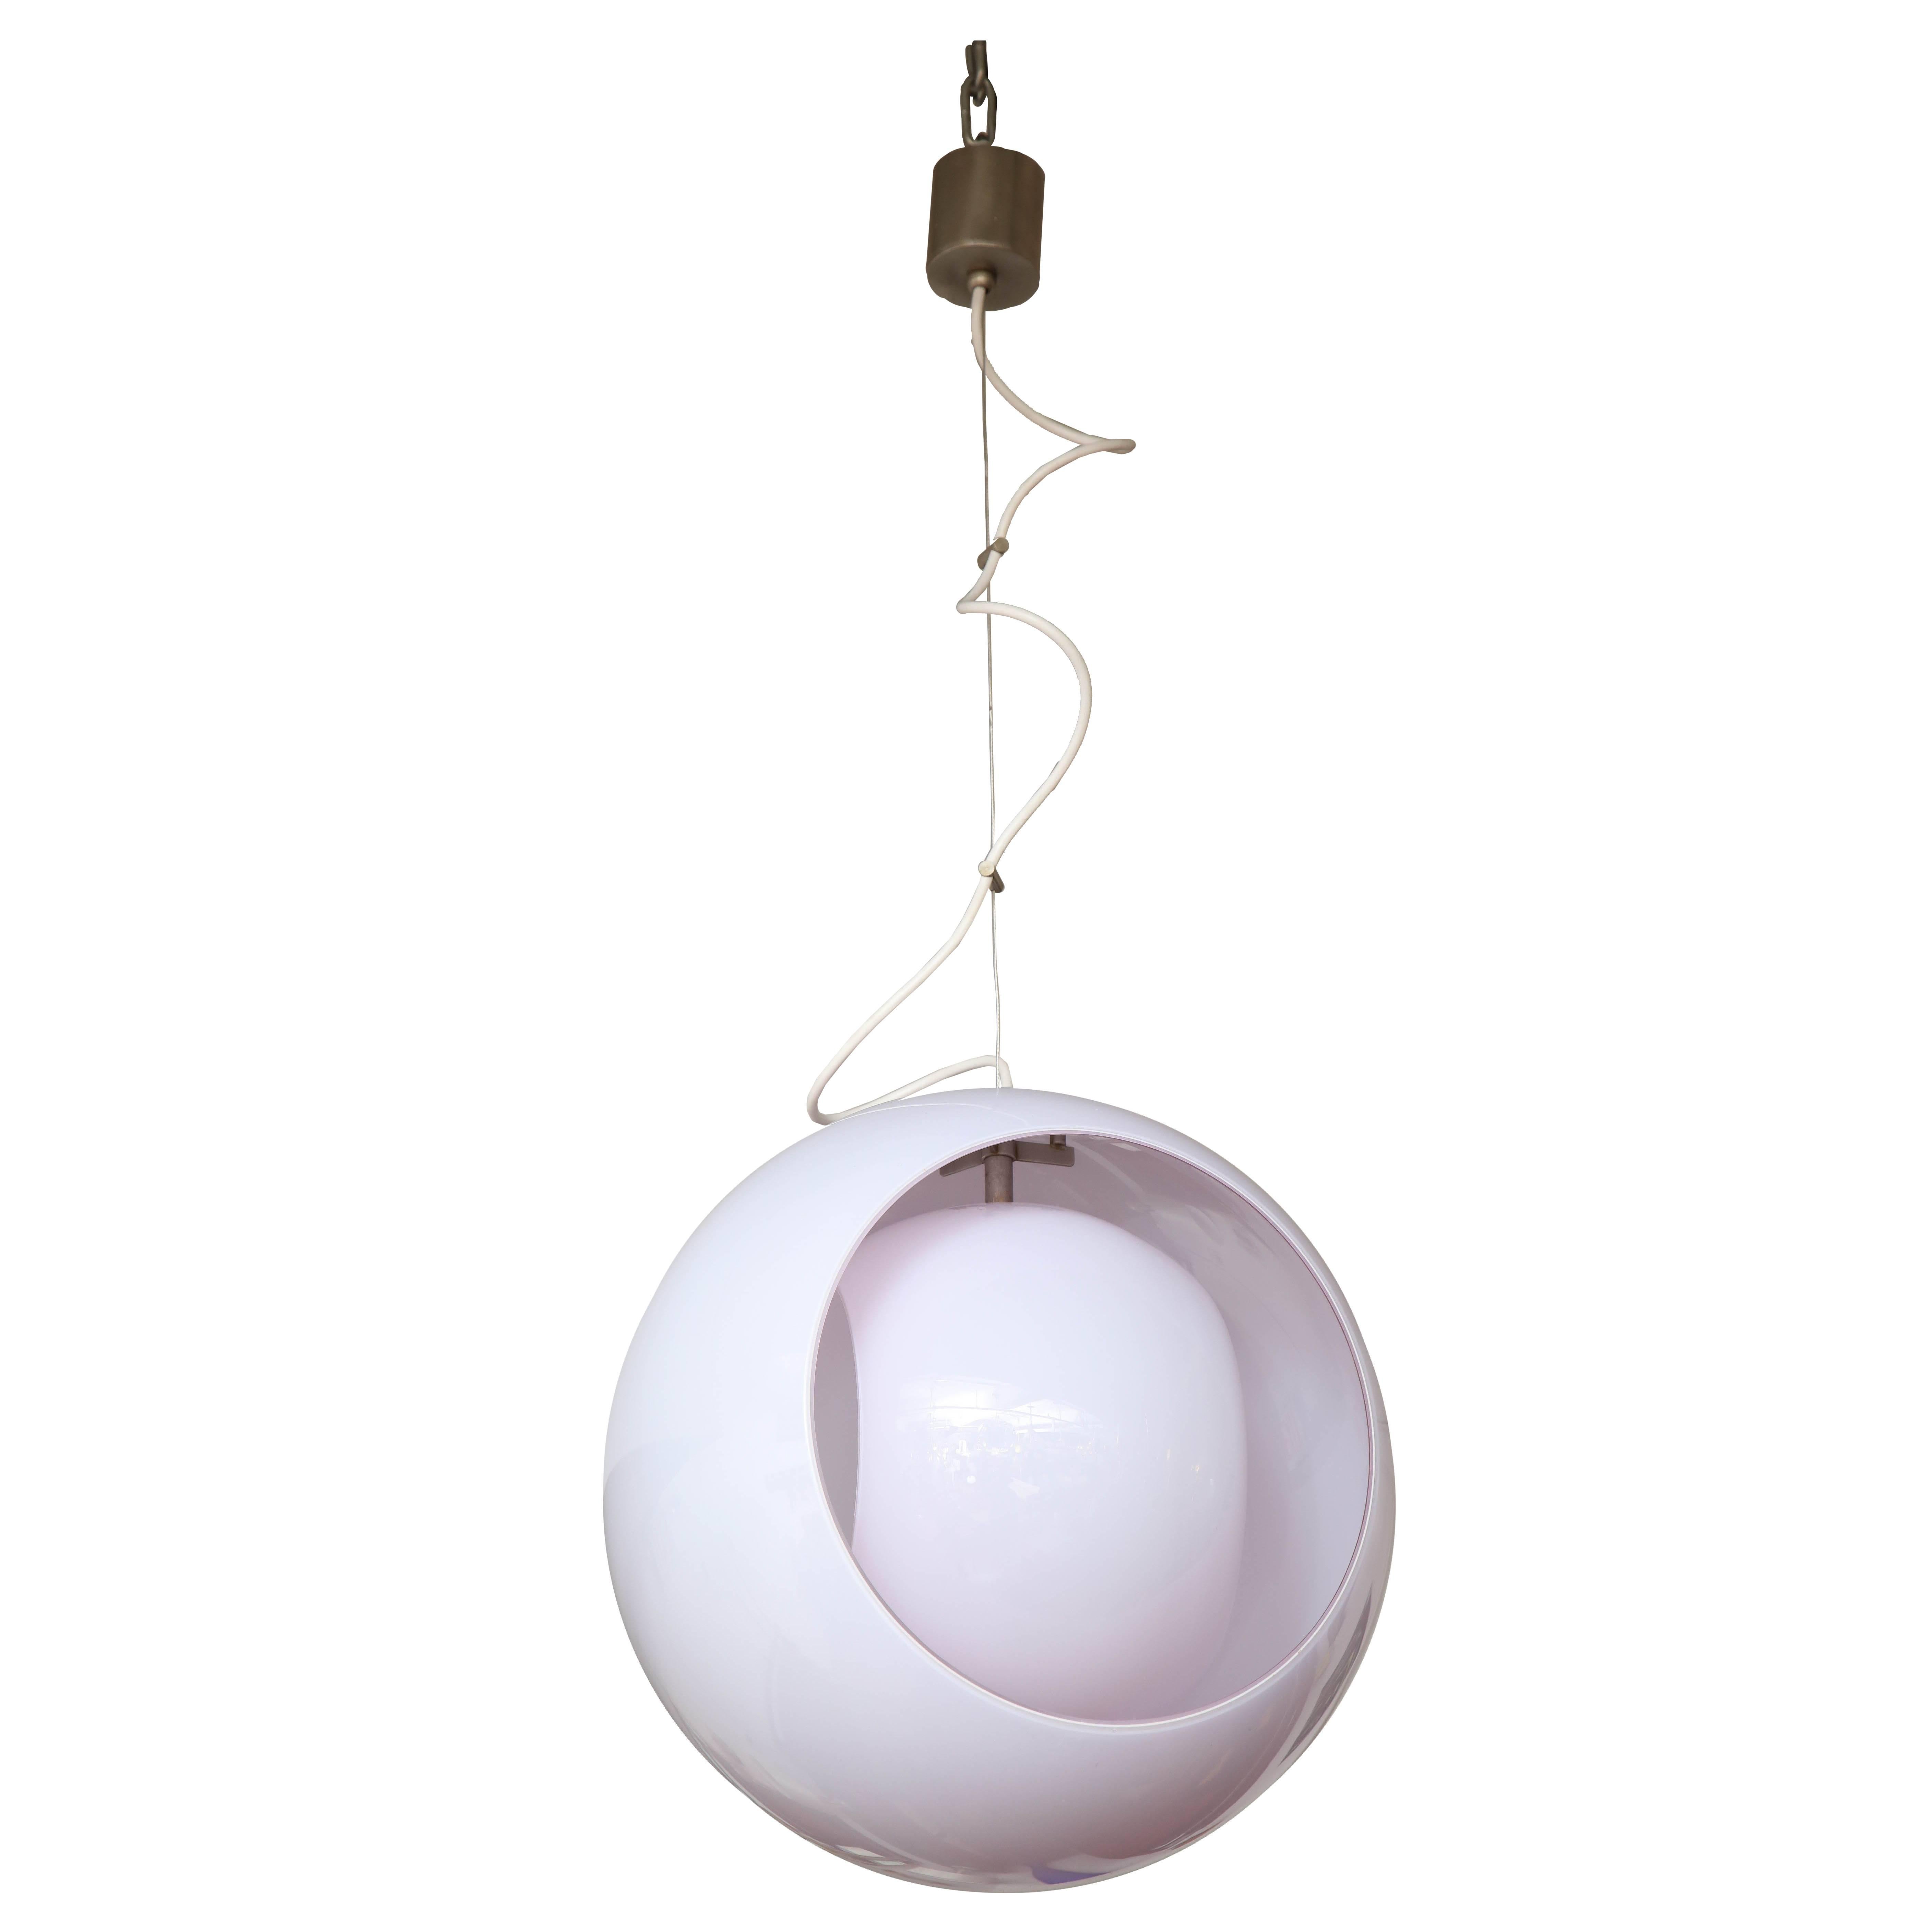 Vistosi pendent light italian designed by Gino Vistosi For Sale